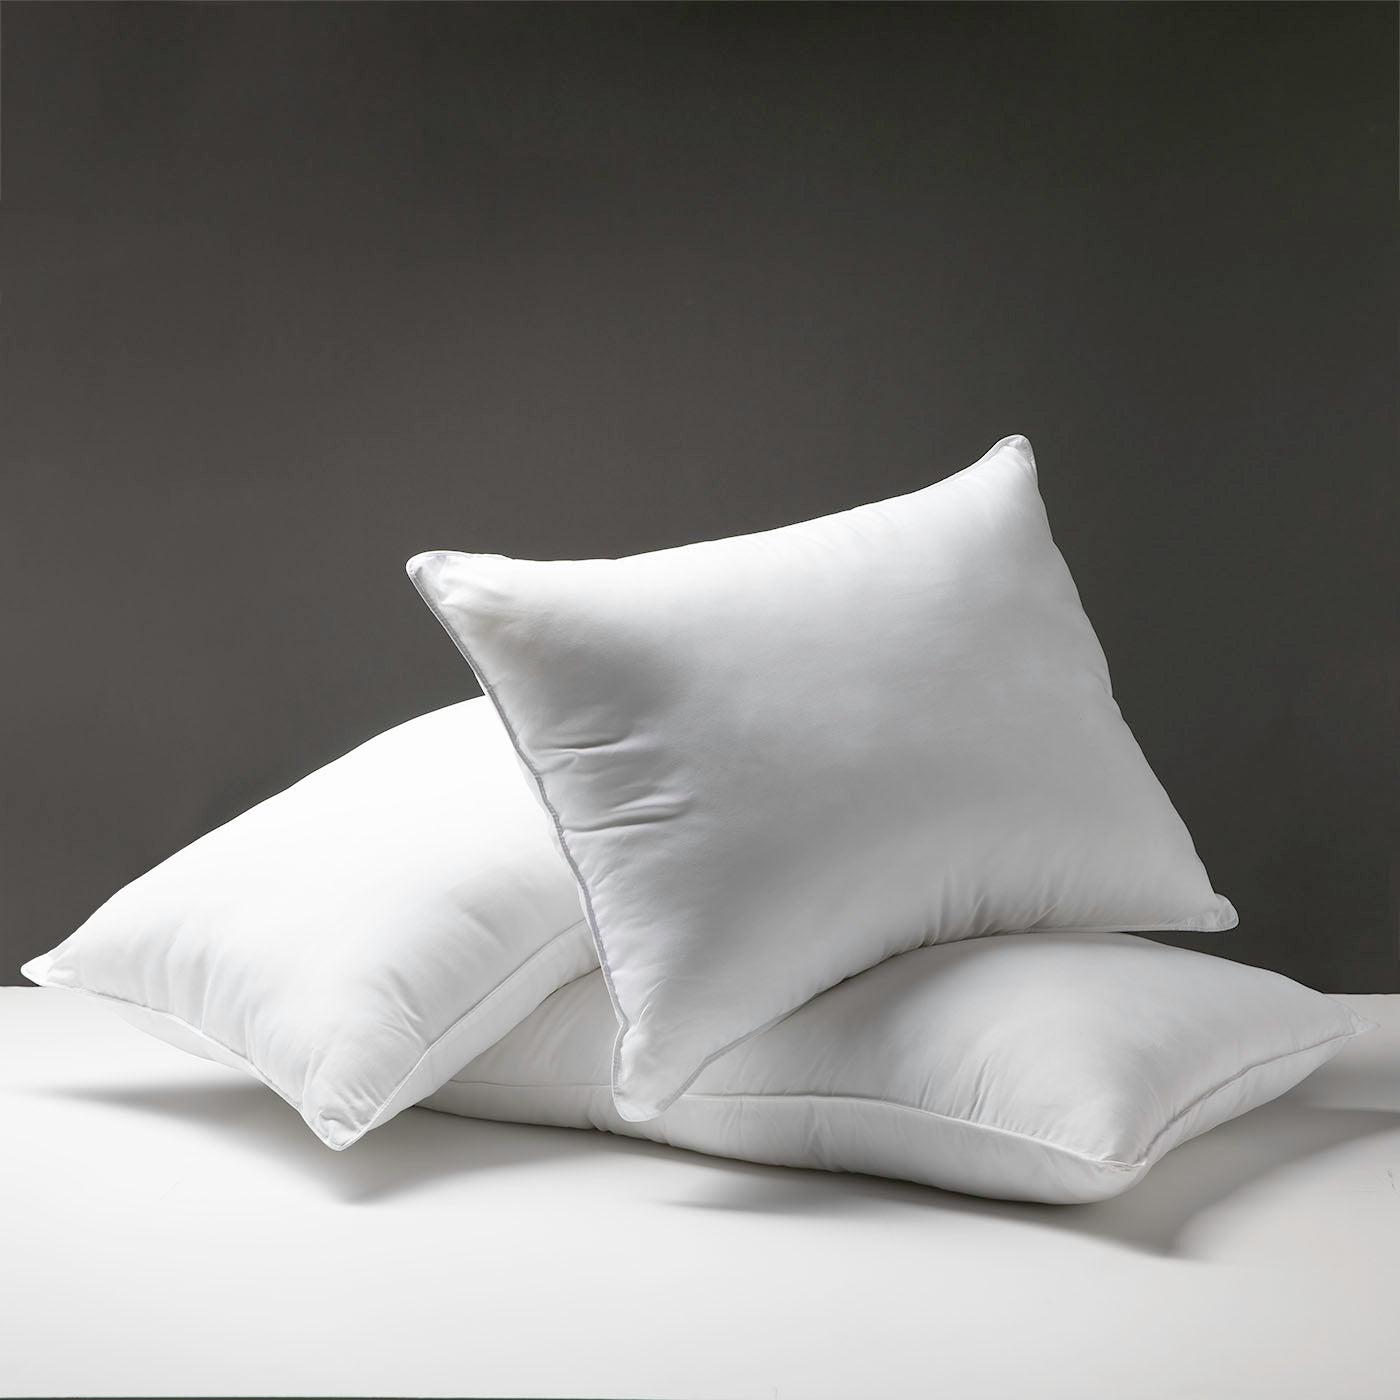 The Sahara Nights Pillow, Sobel Westex Official Site